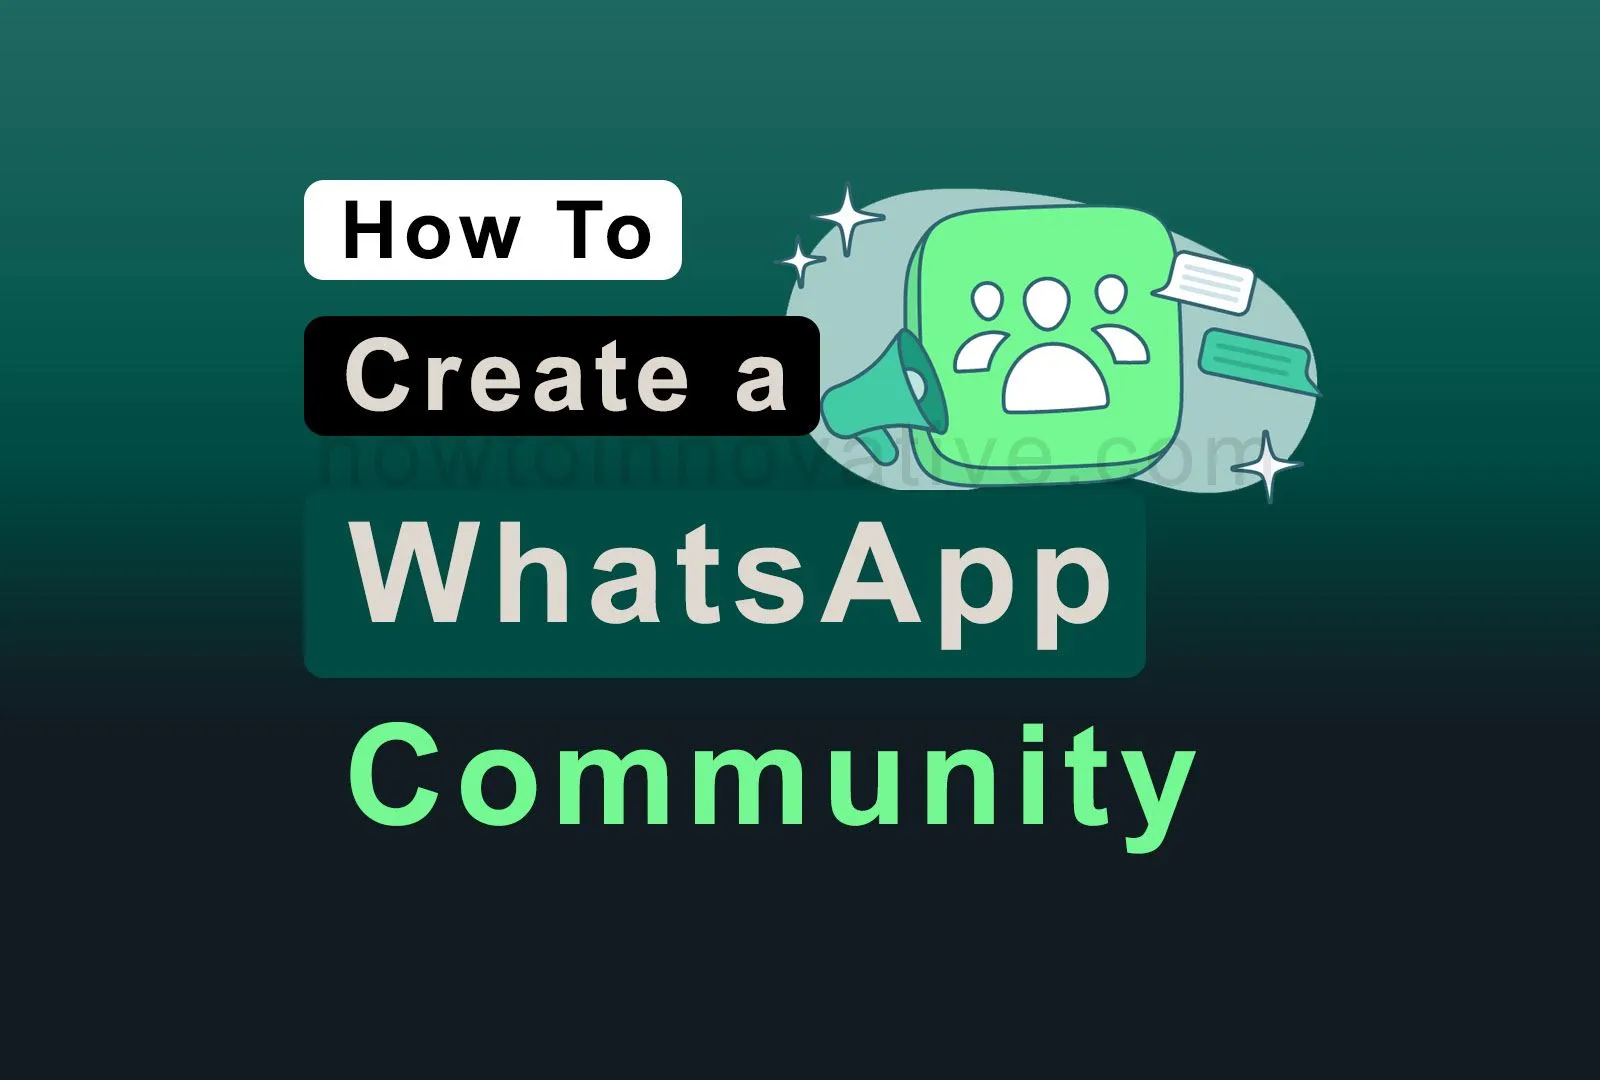 How To Create a WhatsApp Community